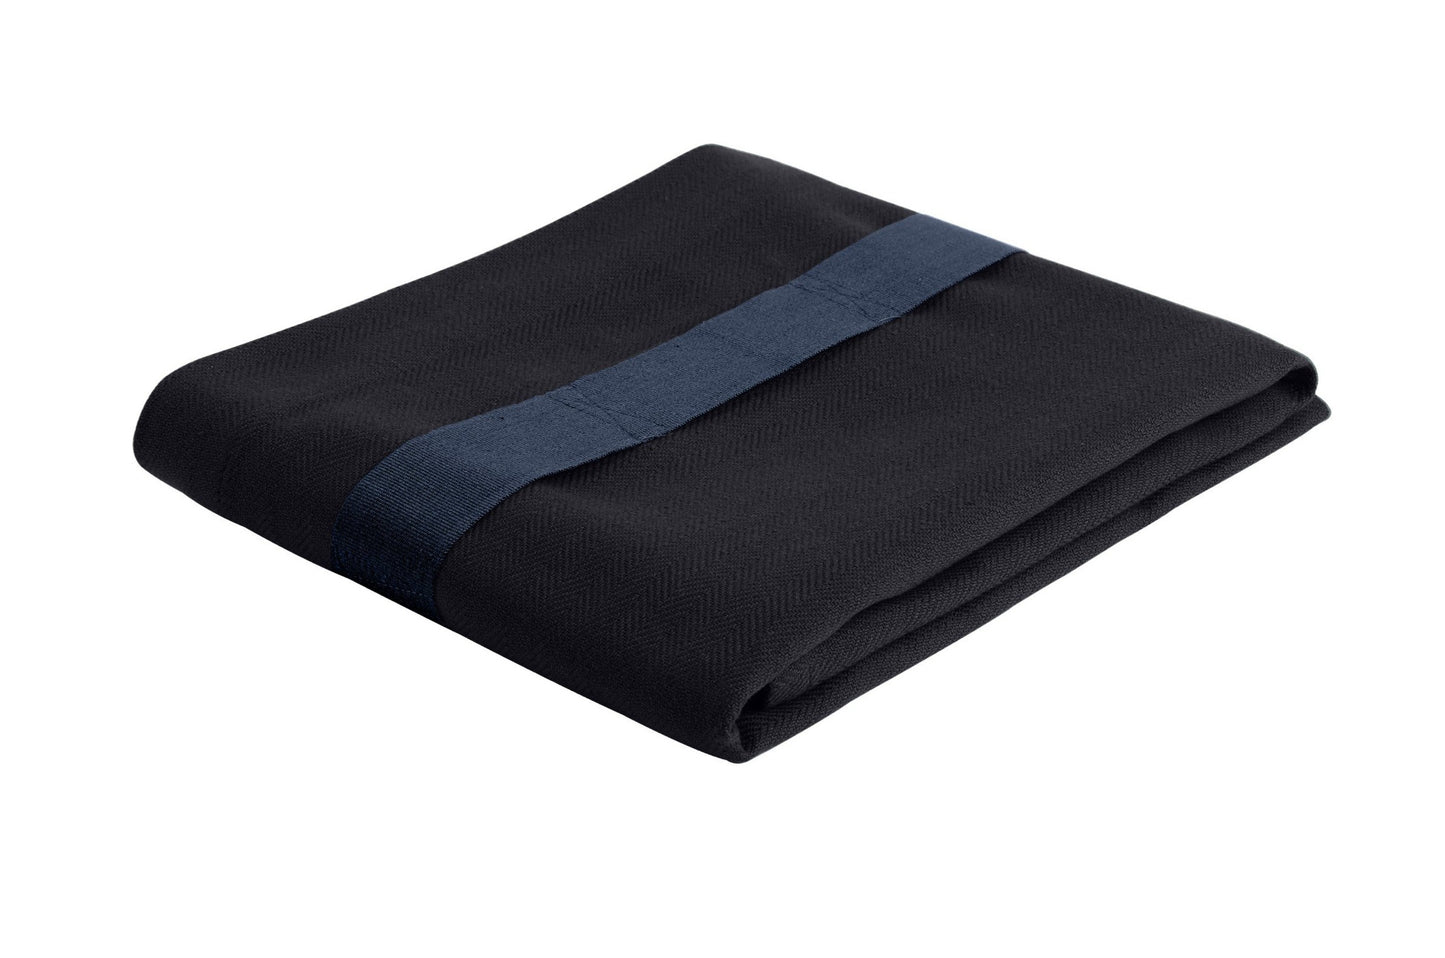 Giant Kitchen Towel/Apron - Black/Dark Blue